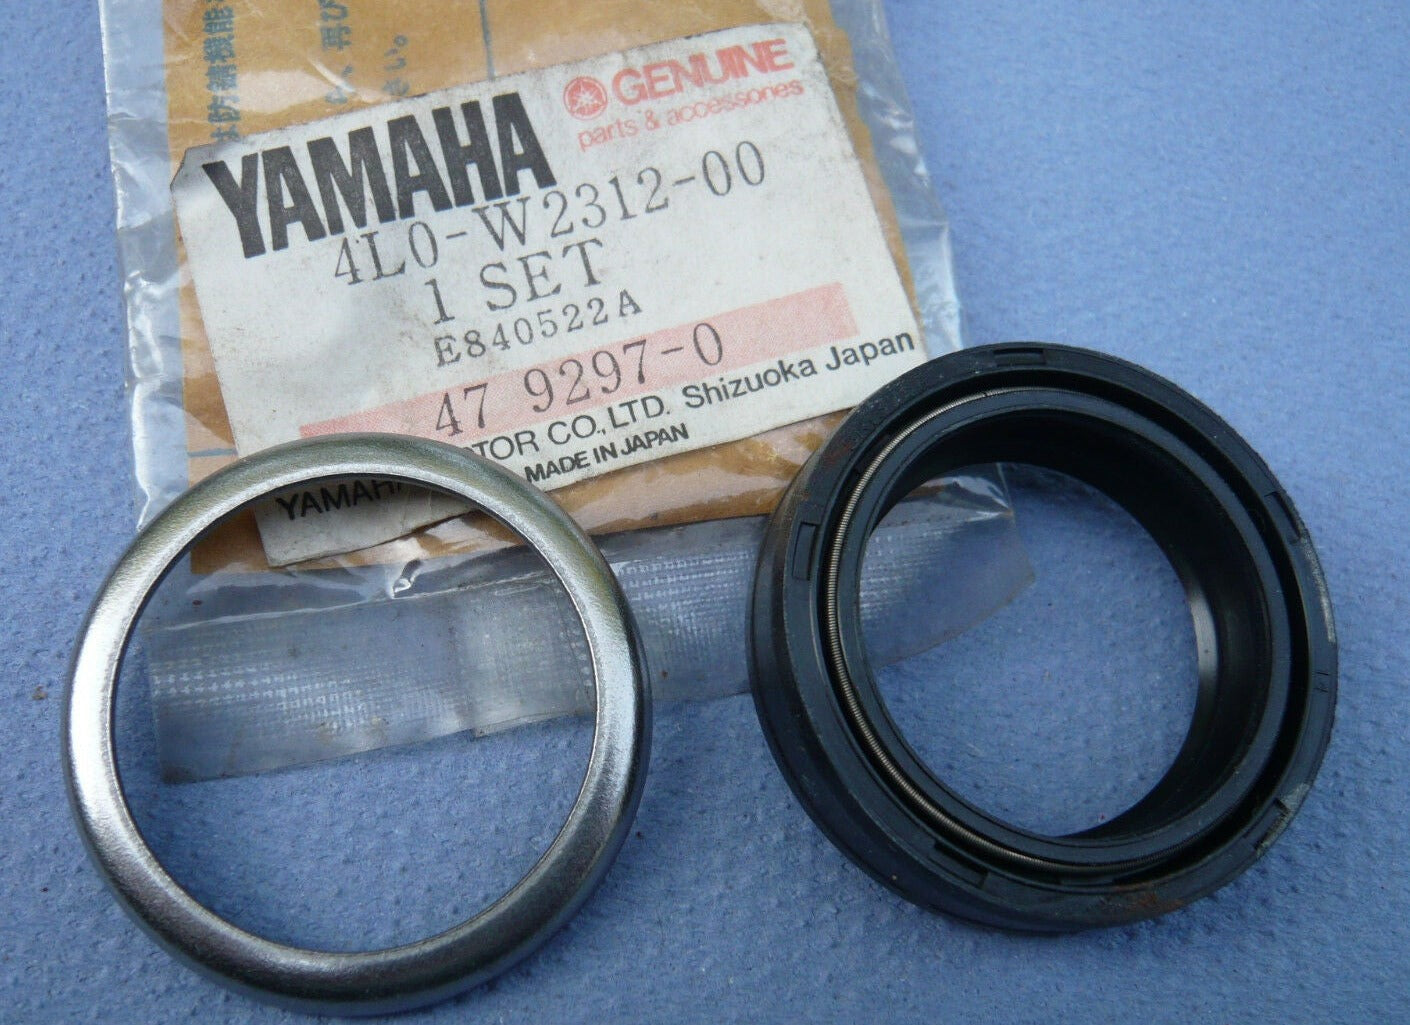 YAMAHA RD250 RD350  Front Fork Oil Seal & Spacer Set  4L0-W2312-00